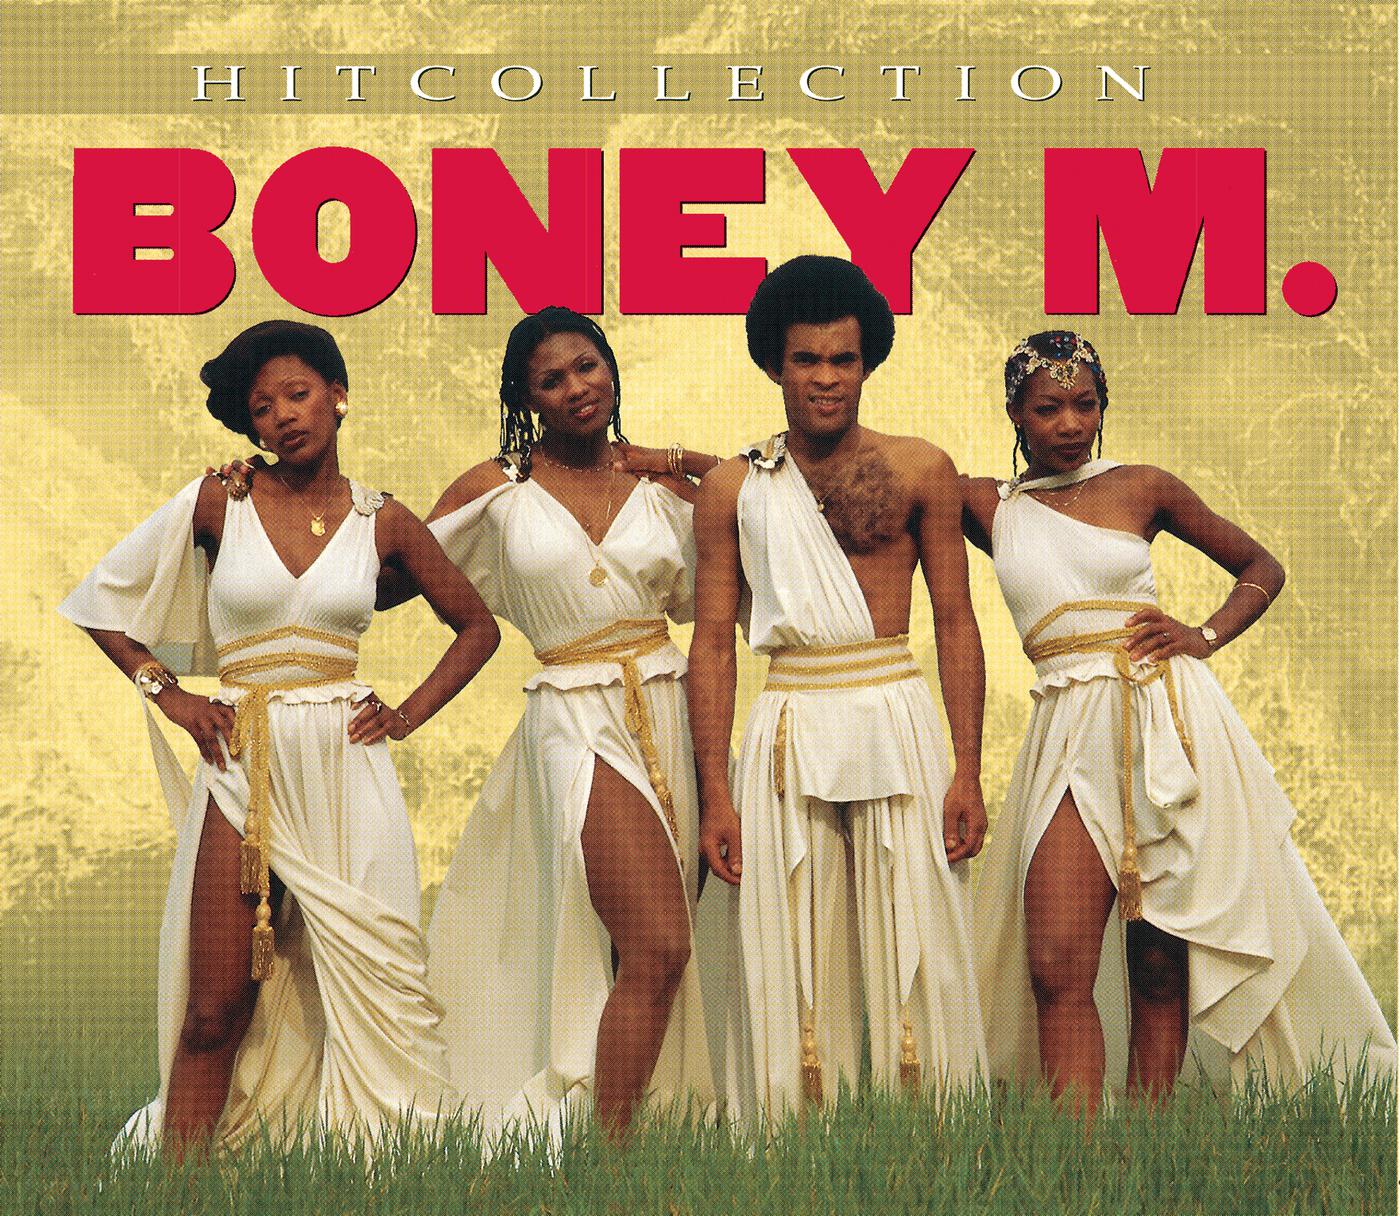 Boney m dance. Группа Boney m.. Группа Boney m. в 80. Бони м ма Бейкер. Группа Бони м 1976.